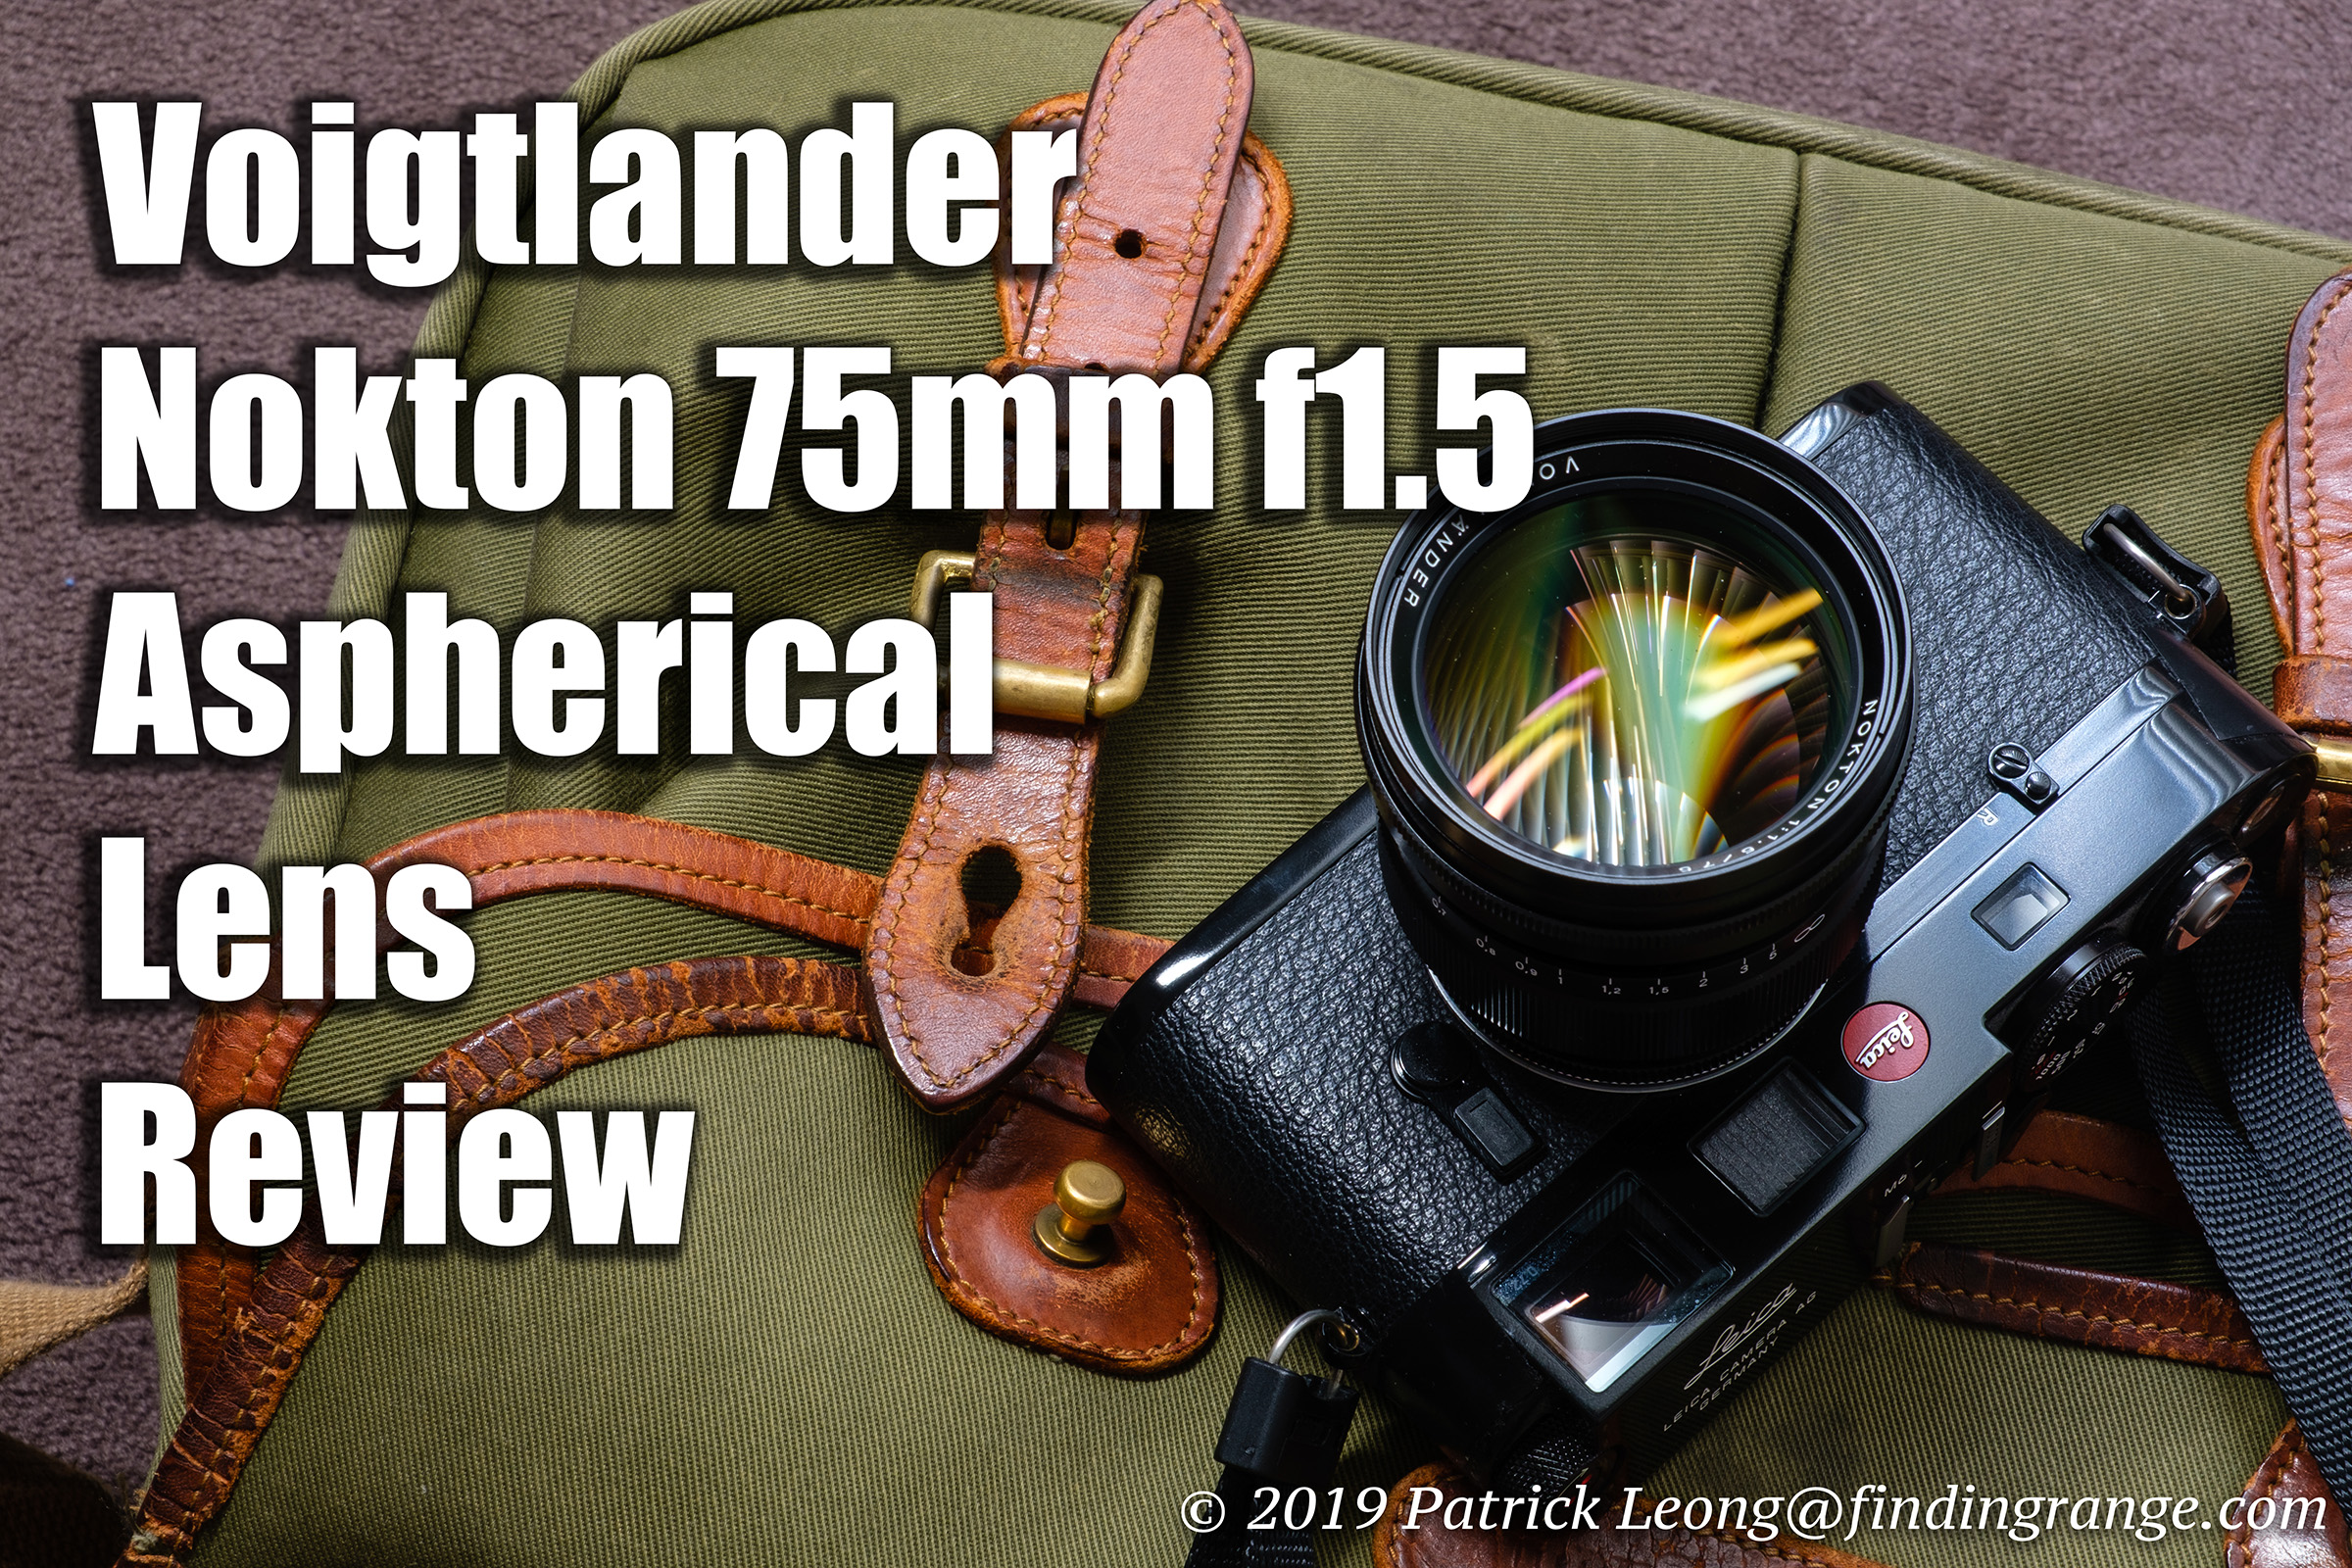 Voigtlander Nokton 75mm f1.5 Aspherical Lens Review